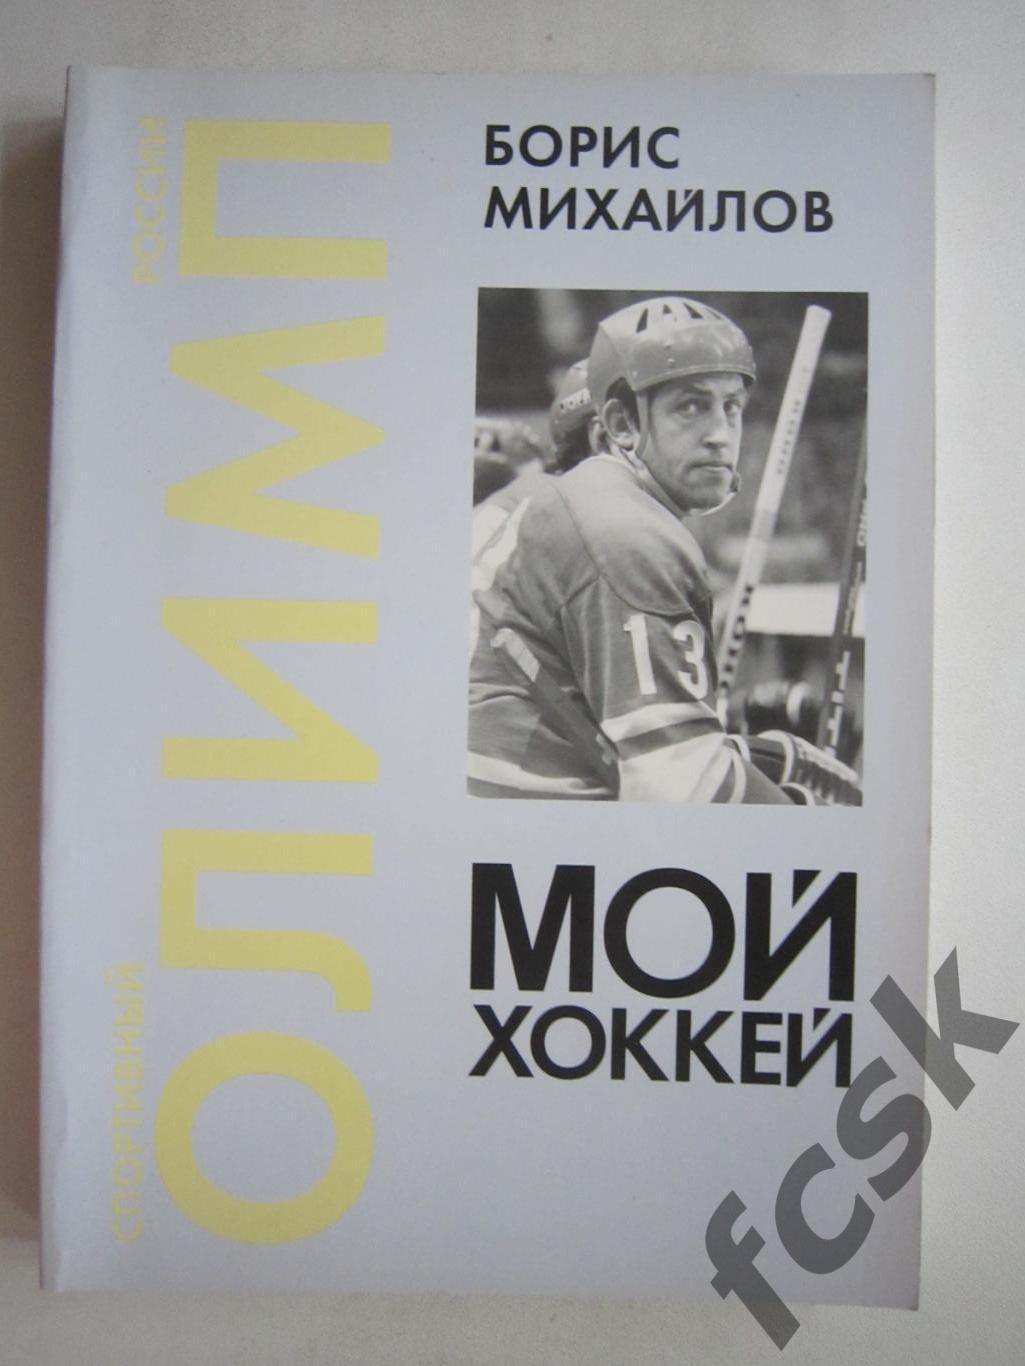 Борис Михайлов. Мой хоккей (ФГ-2)